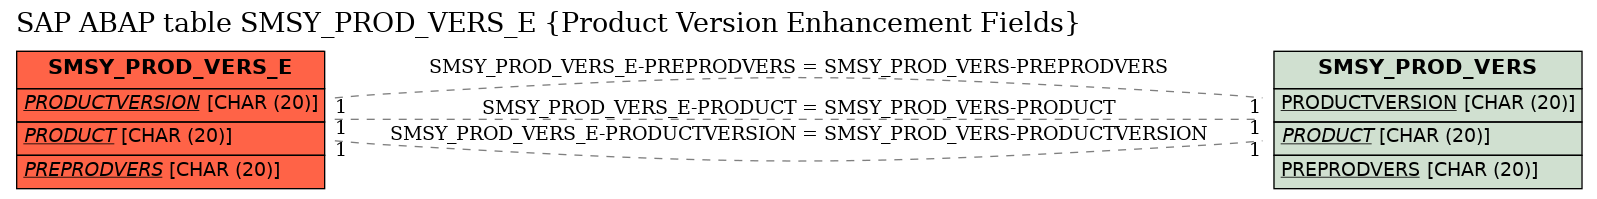 E-R Diagram for table SMSY_PROD_VERS_E (Product Version Enhancement Fields)